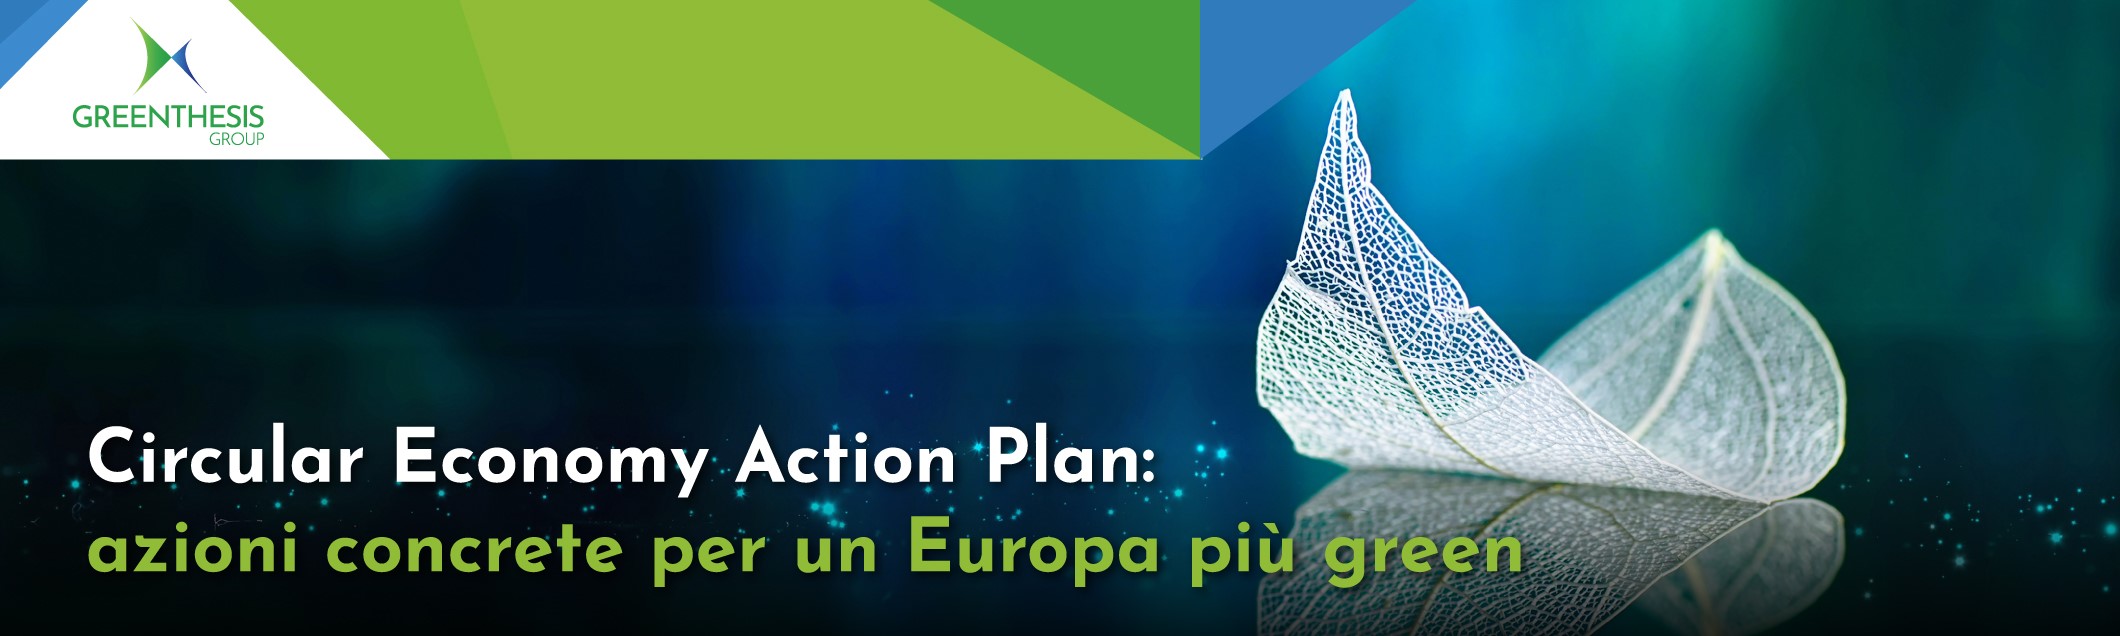 Circular Economy Action Plan: azioni concrete per un Europa più green